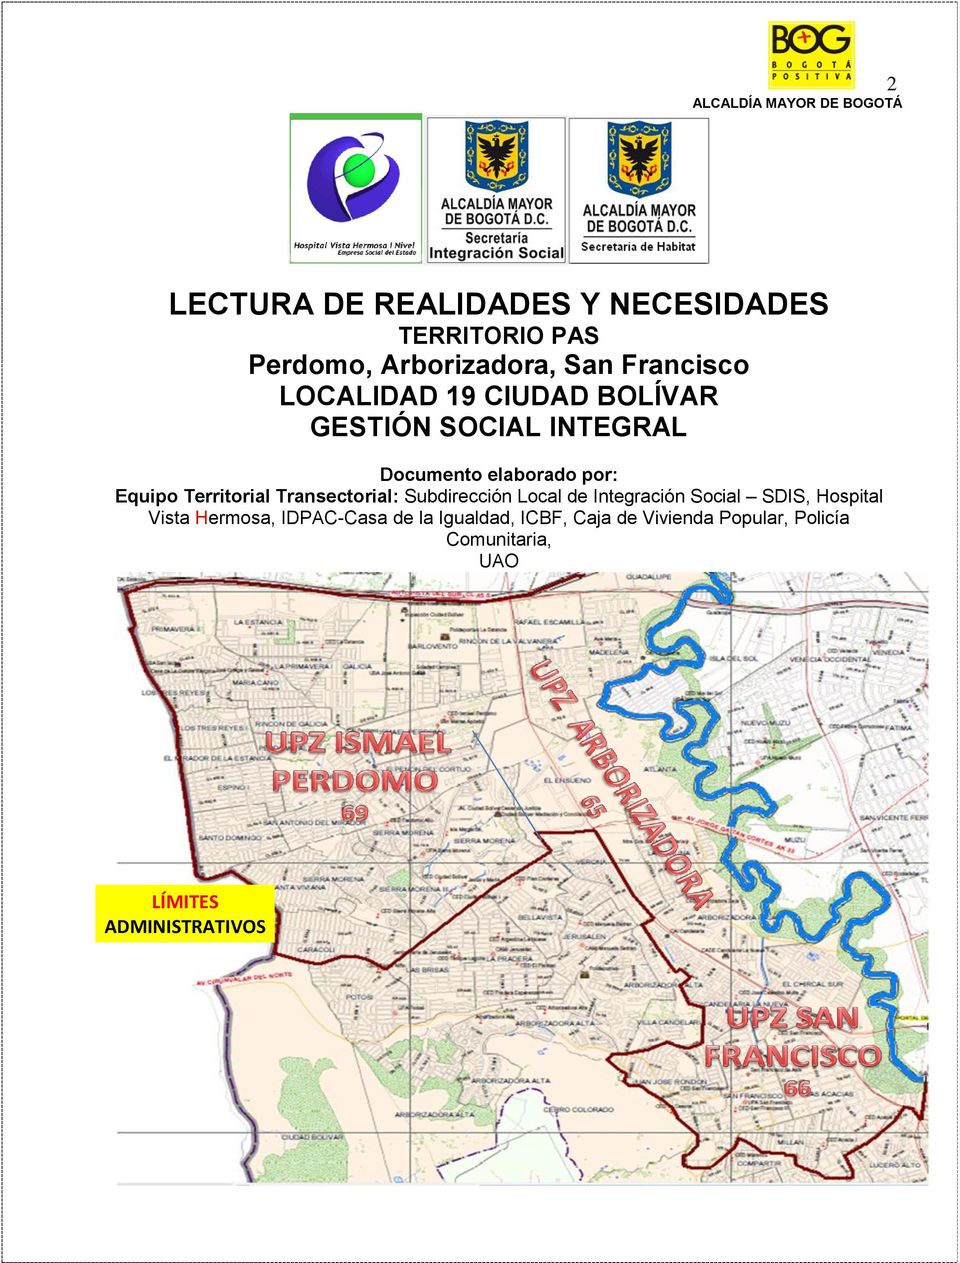 Territorial Transectorial: Subdirección Local de Integración Social SDIS, Hospital Vista